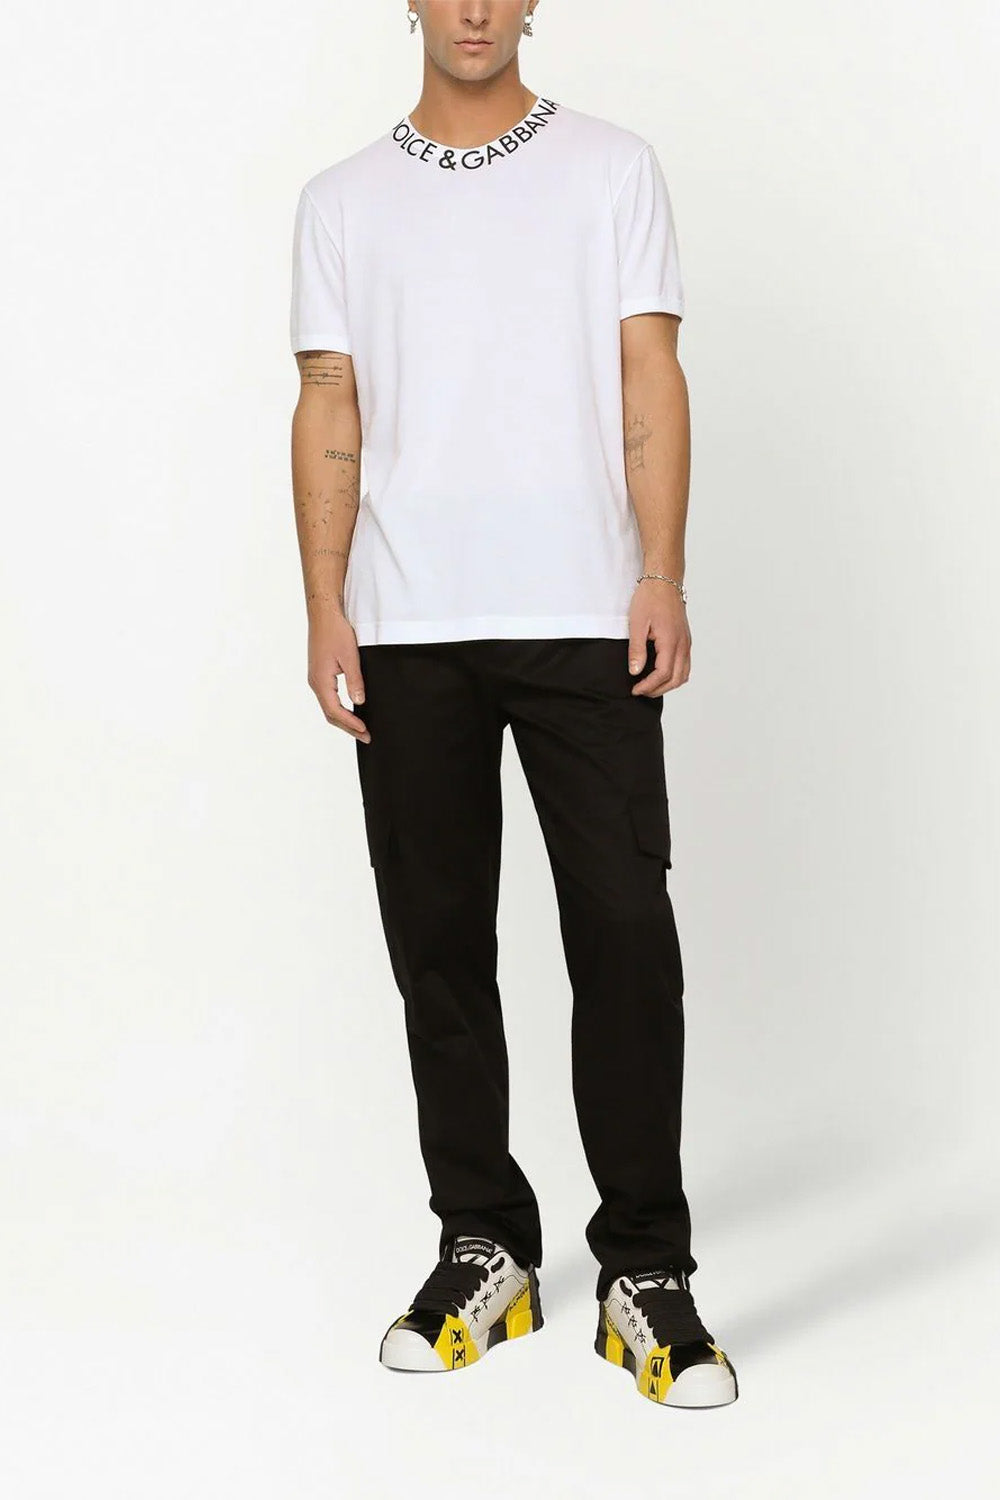 Dolce & Gabbana logo-print neckline T-shirt white